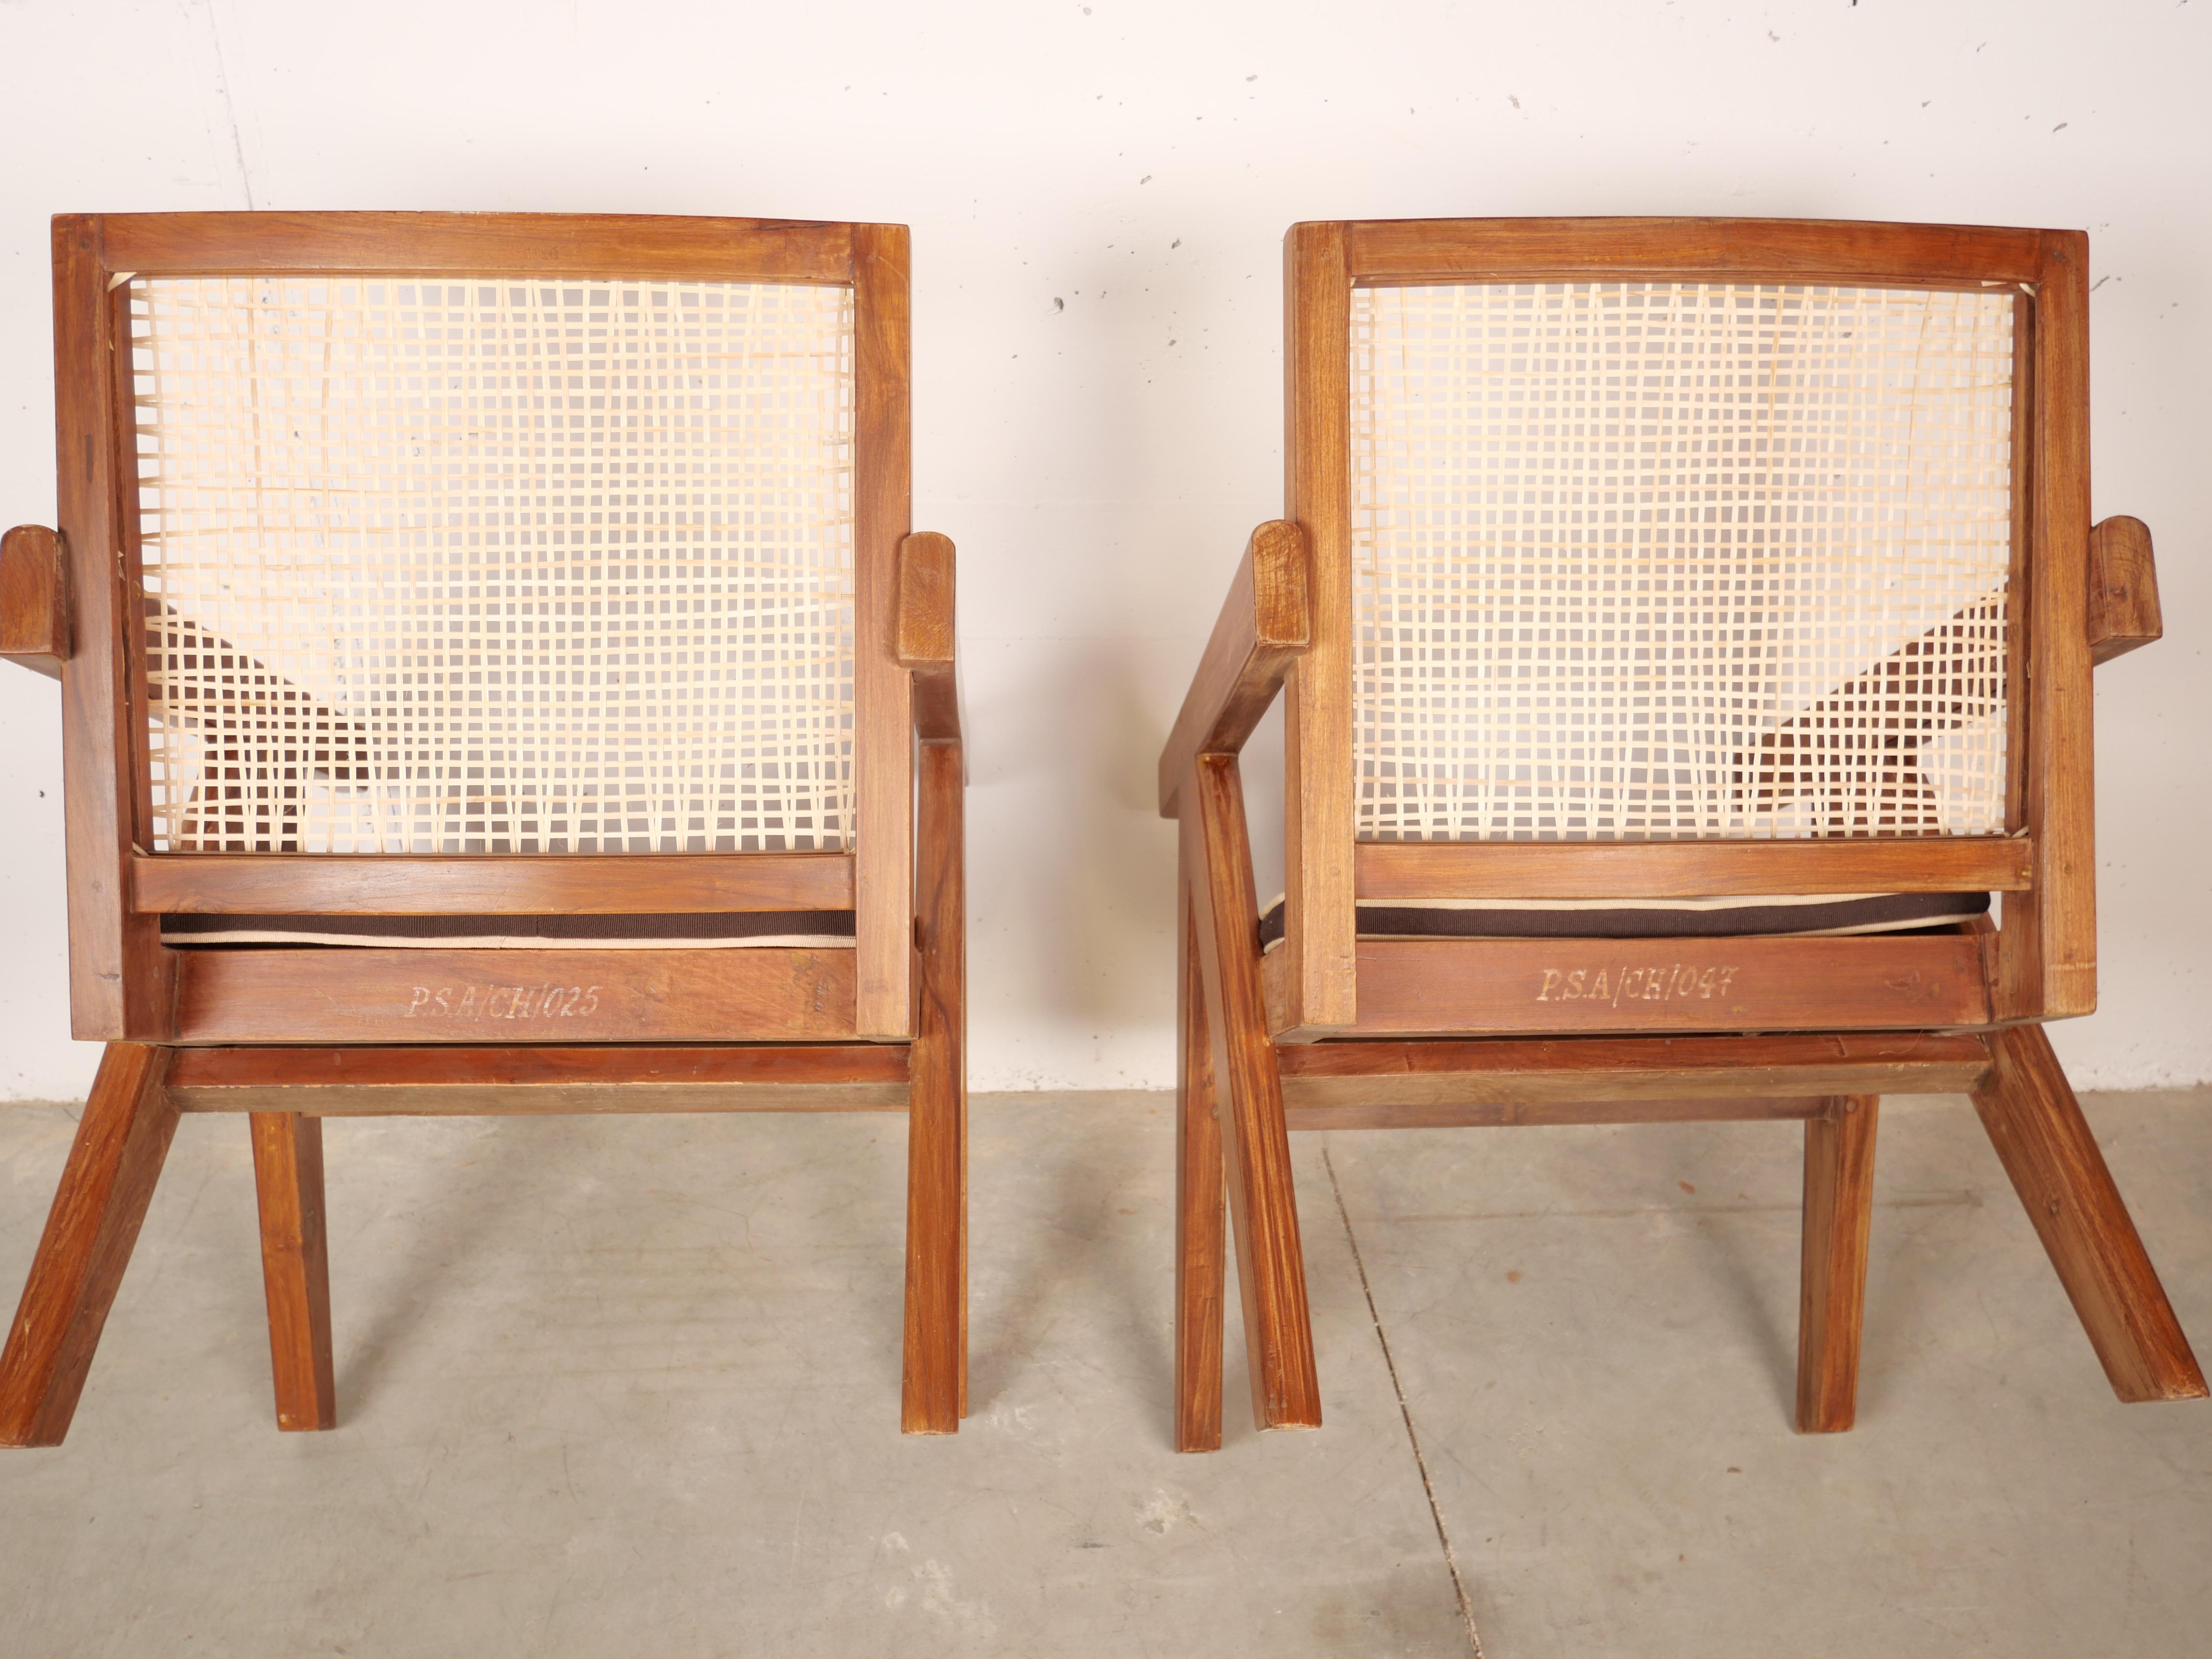 Pierre Jeanneret teak armchair:
PSA/CH/025 (Punjab Secretariat Administration Chair n° 025)
PSA/CH/047 (Punjab Secretariat Administration Chair n° 047)
Armchair known as « Cane and teak wood armchair » or 